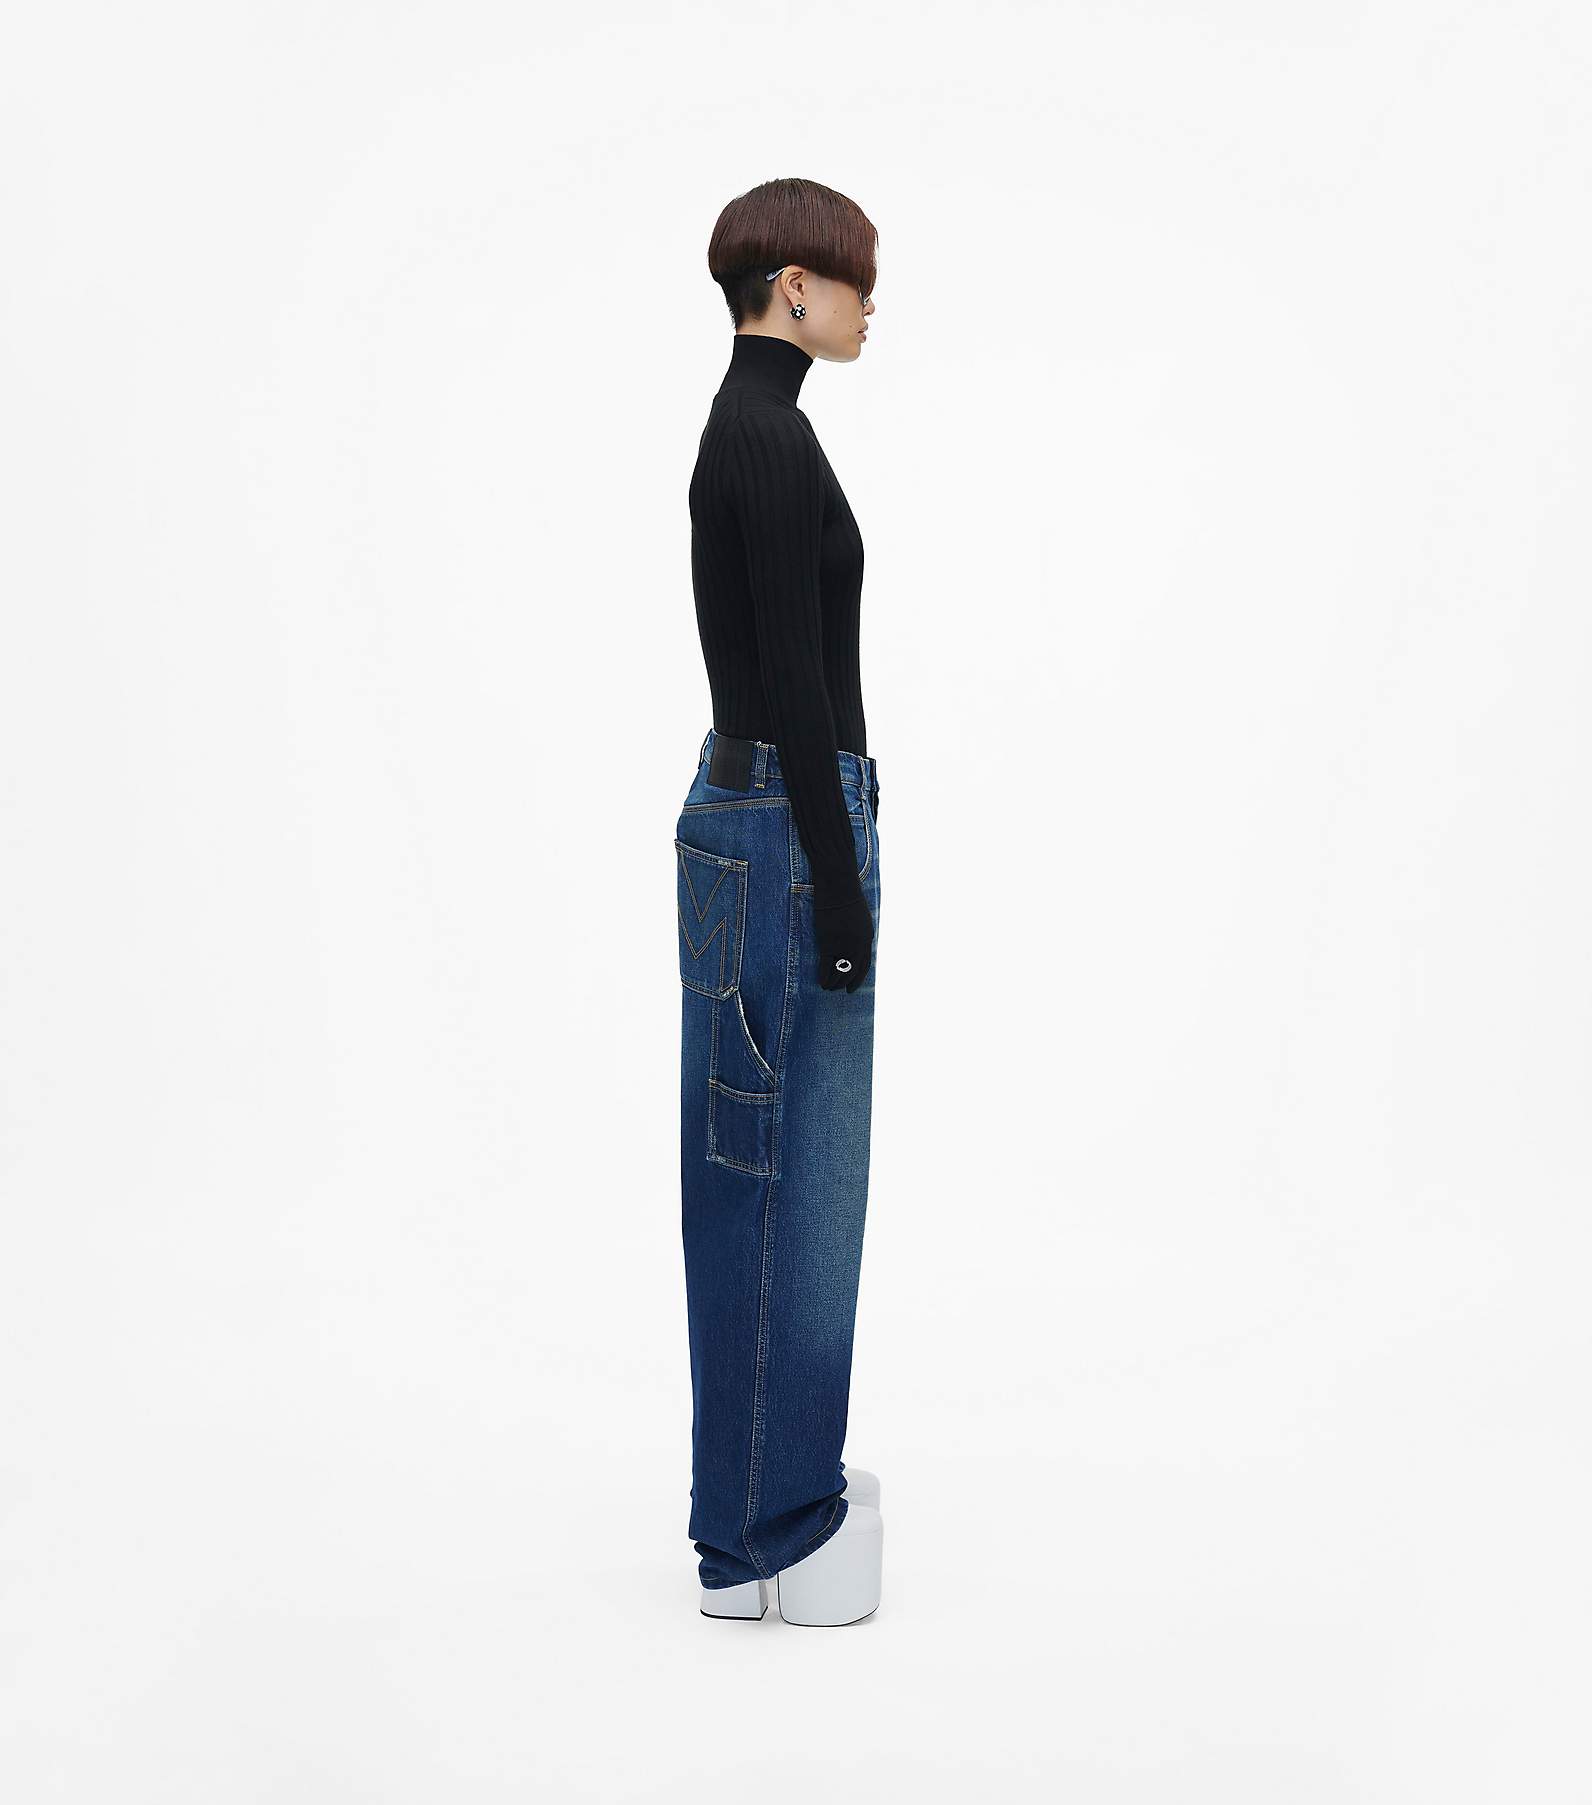 The Monogram Oversized Jean, Marc Jacobs